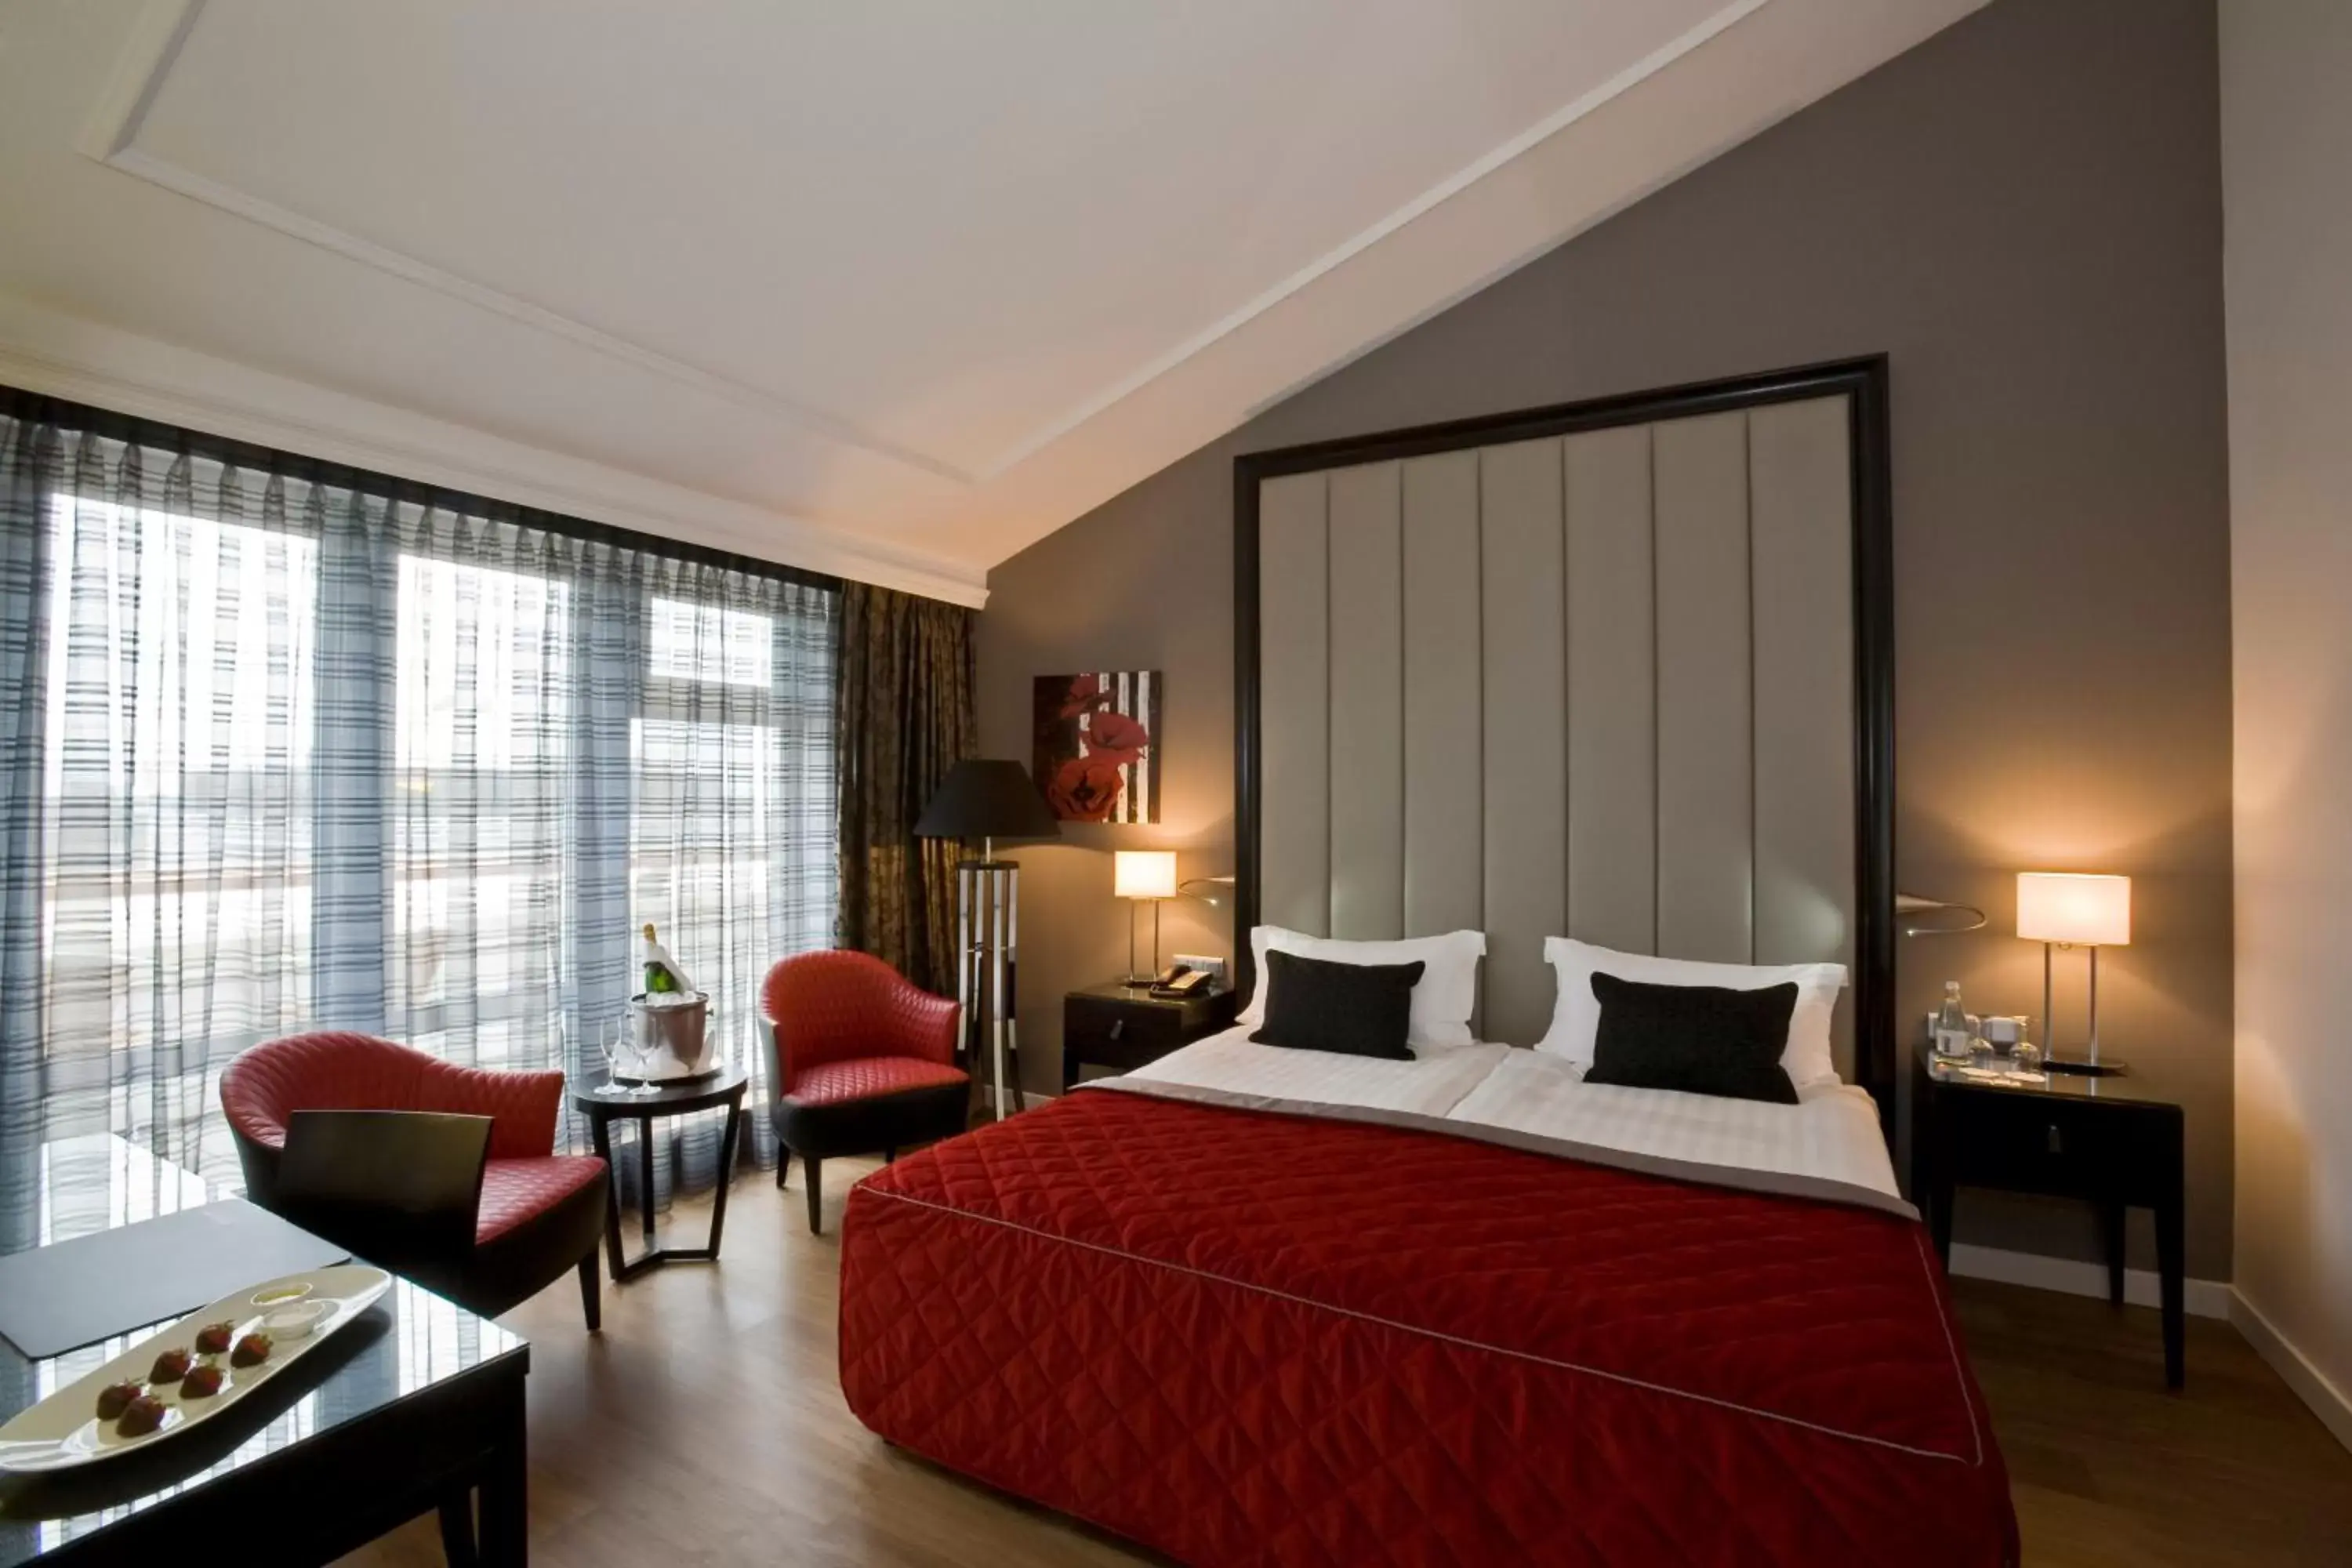 Executive Double Room with Sea View in Grand Hotel Amrâth Kurhaus The Hague Scheveningen